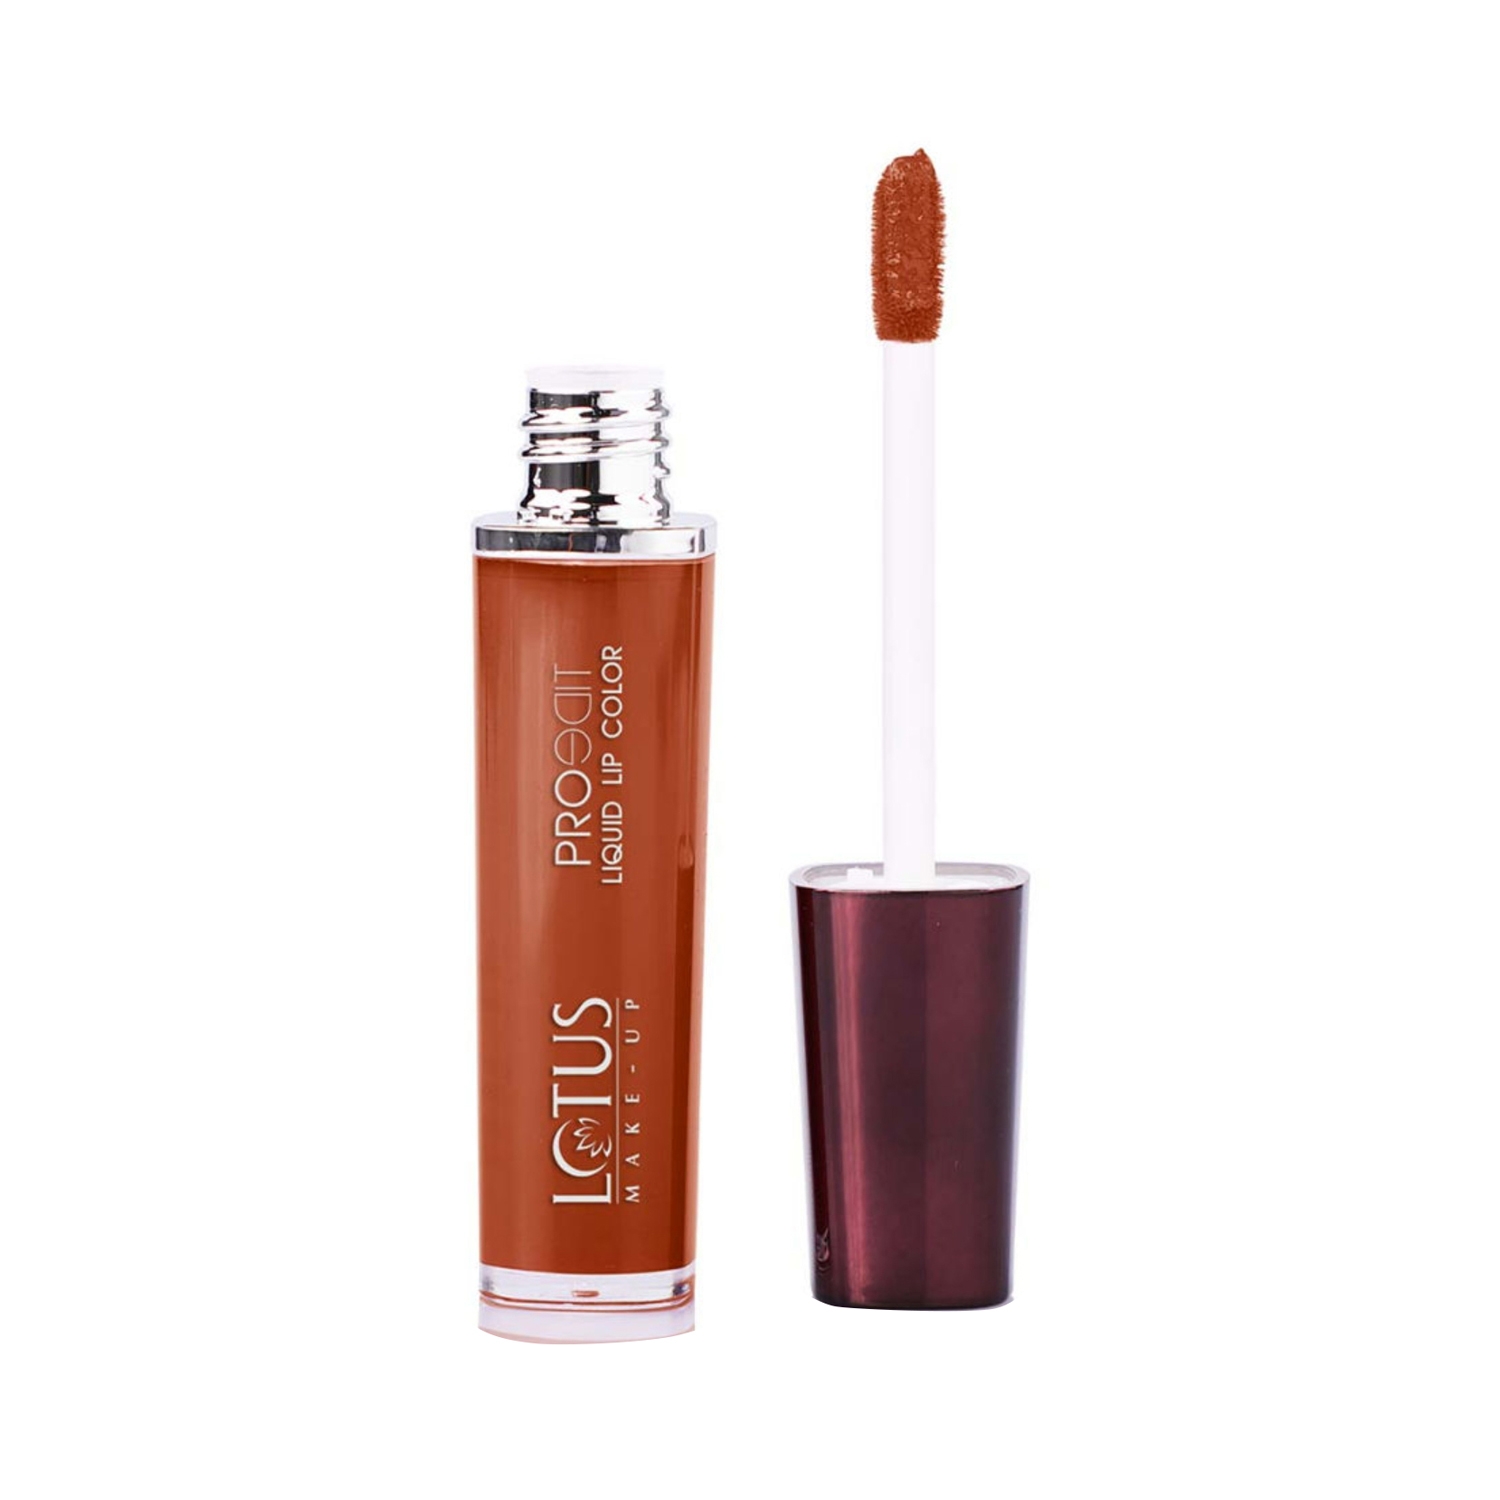 Lotus | Lotus Makeup Proedit Liquid Matte Lip Color - PLC11 True Brown (8g)